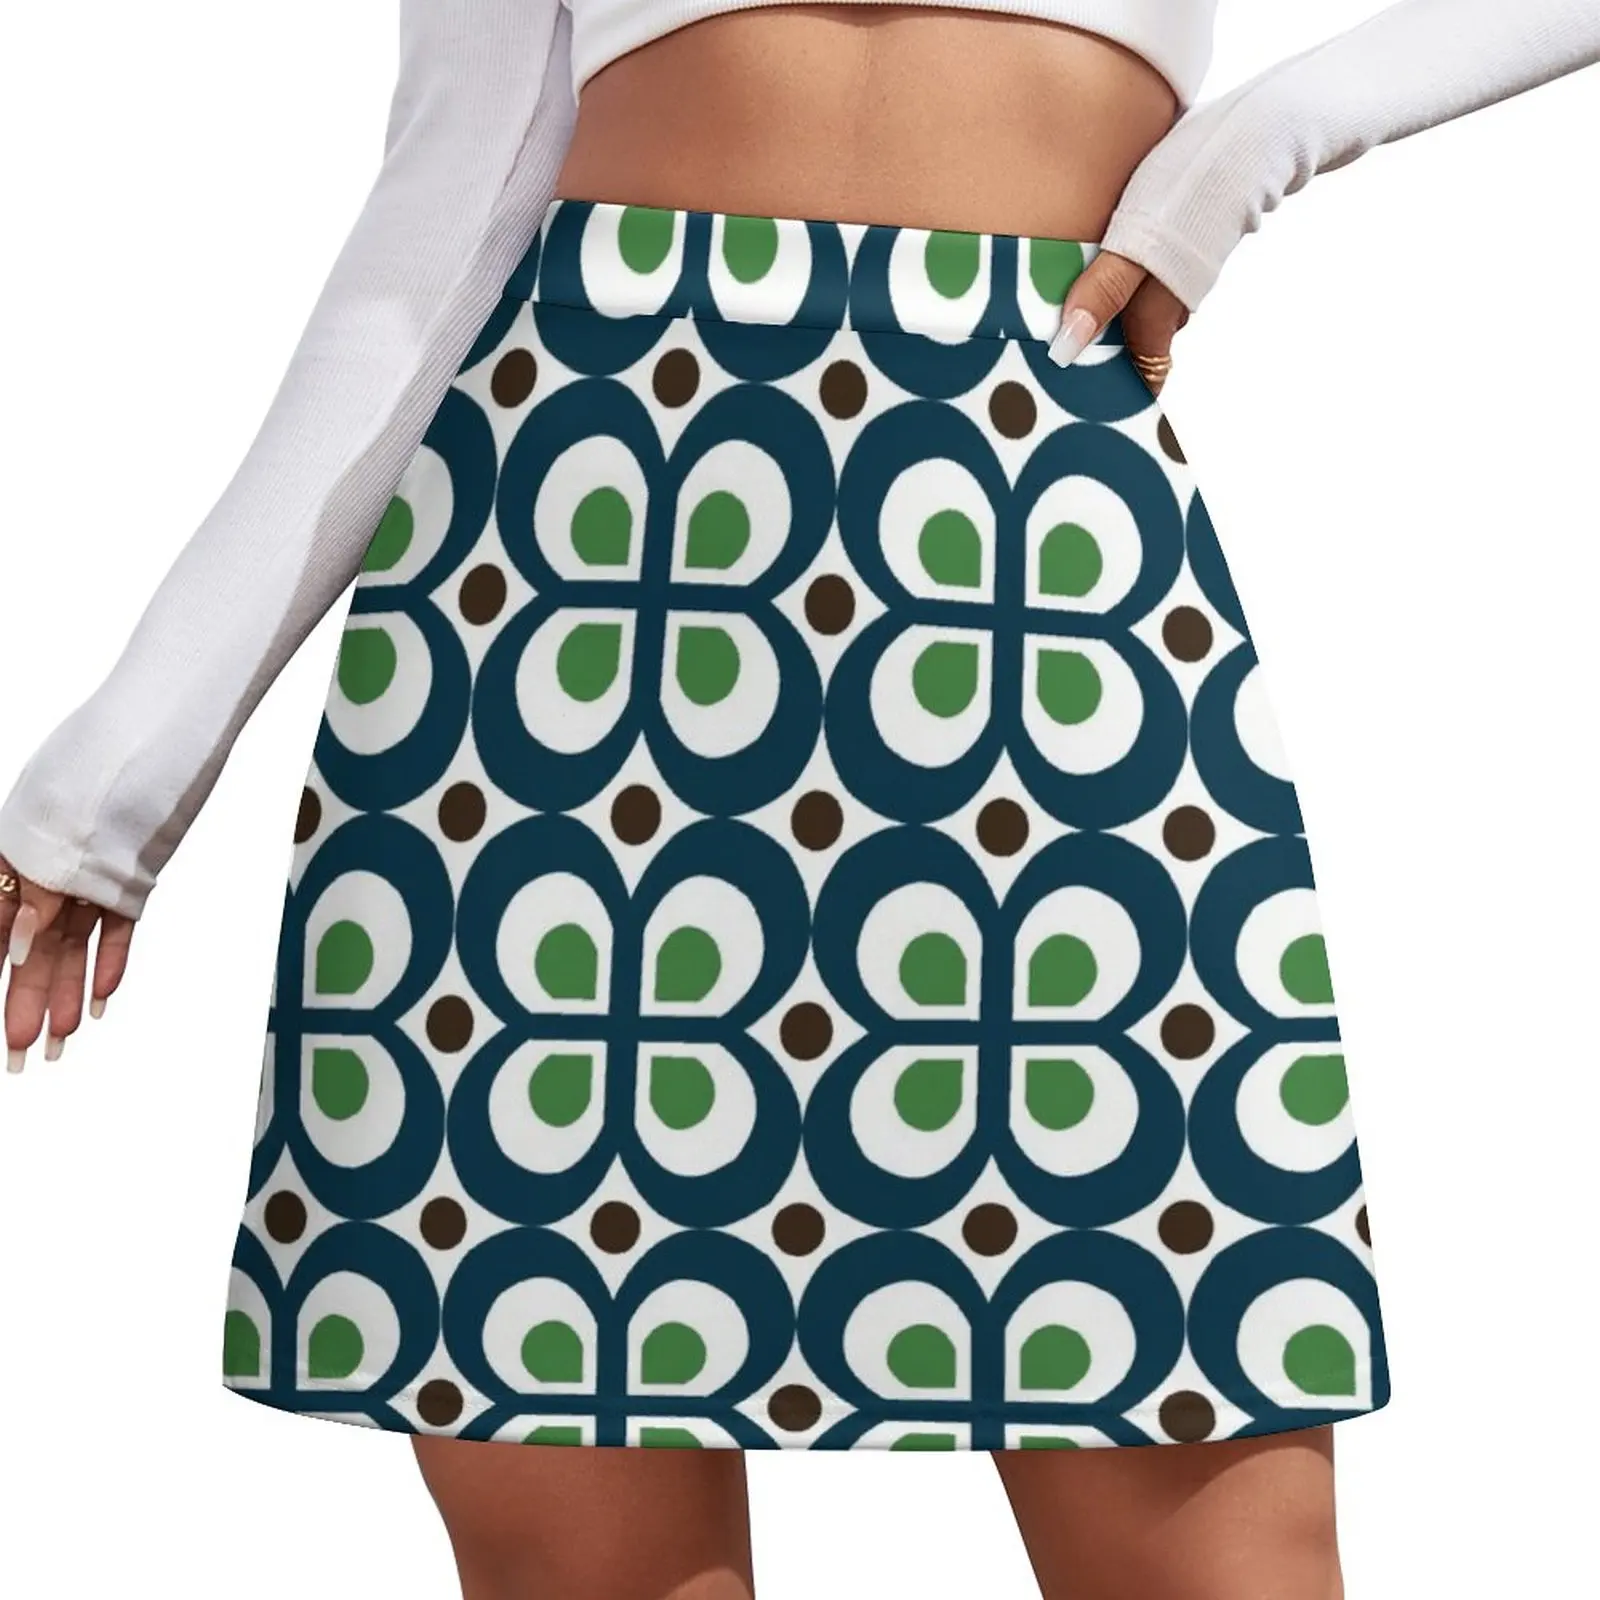 Retro 60s Pattern Mini Skirt Women's clothing Kawaii extreme mini dress skirts for womans